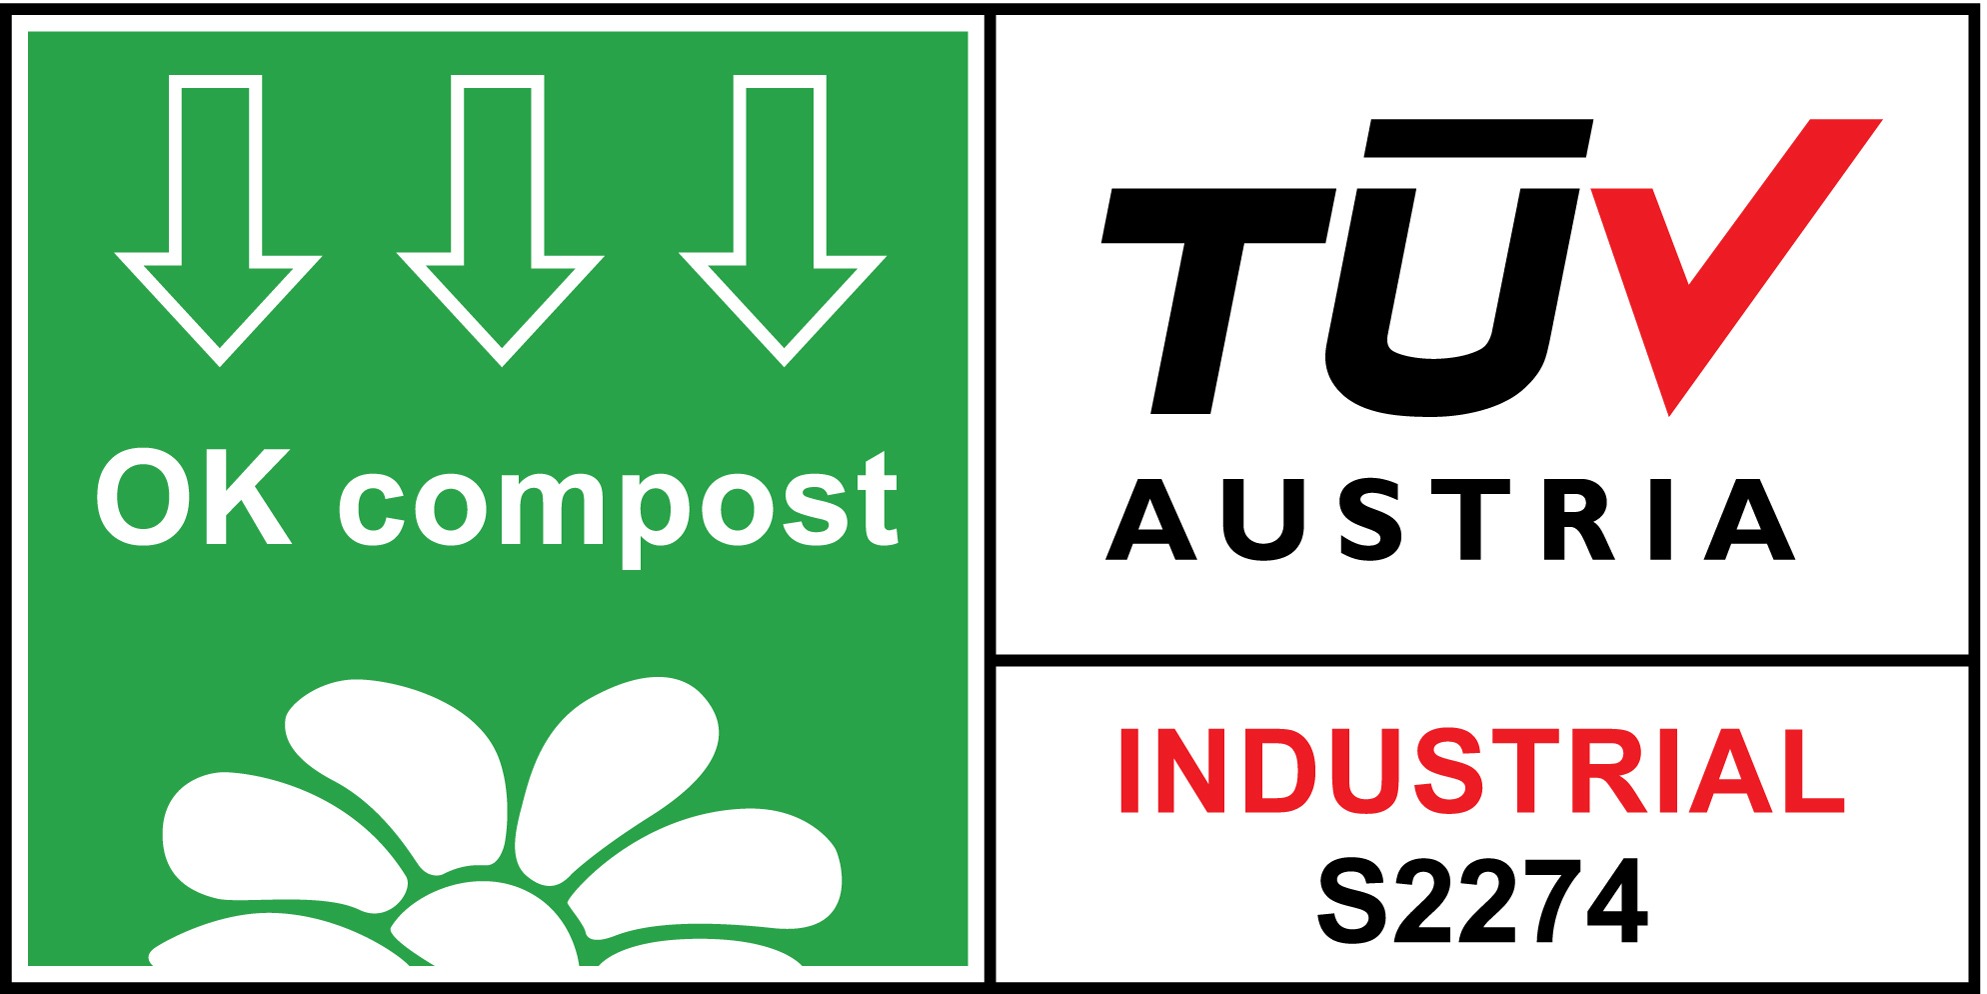 ADBioplastics - Sello OK compost de TÜV Austria.